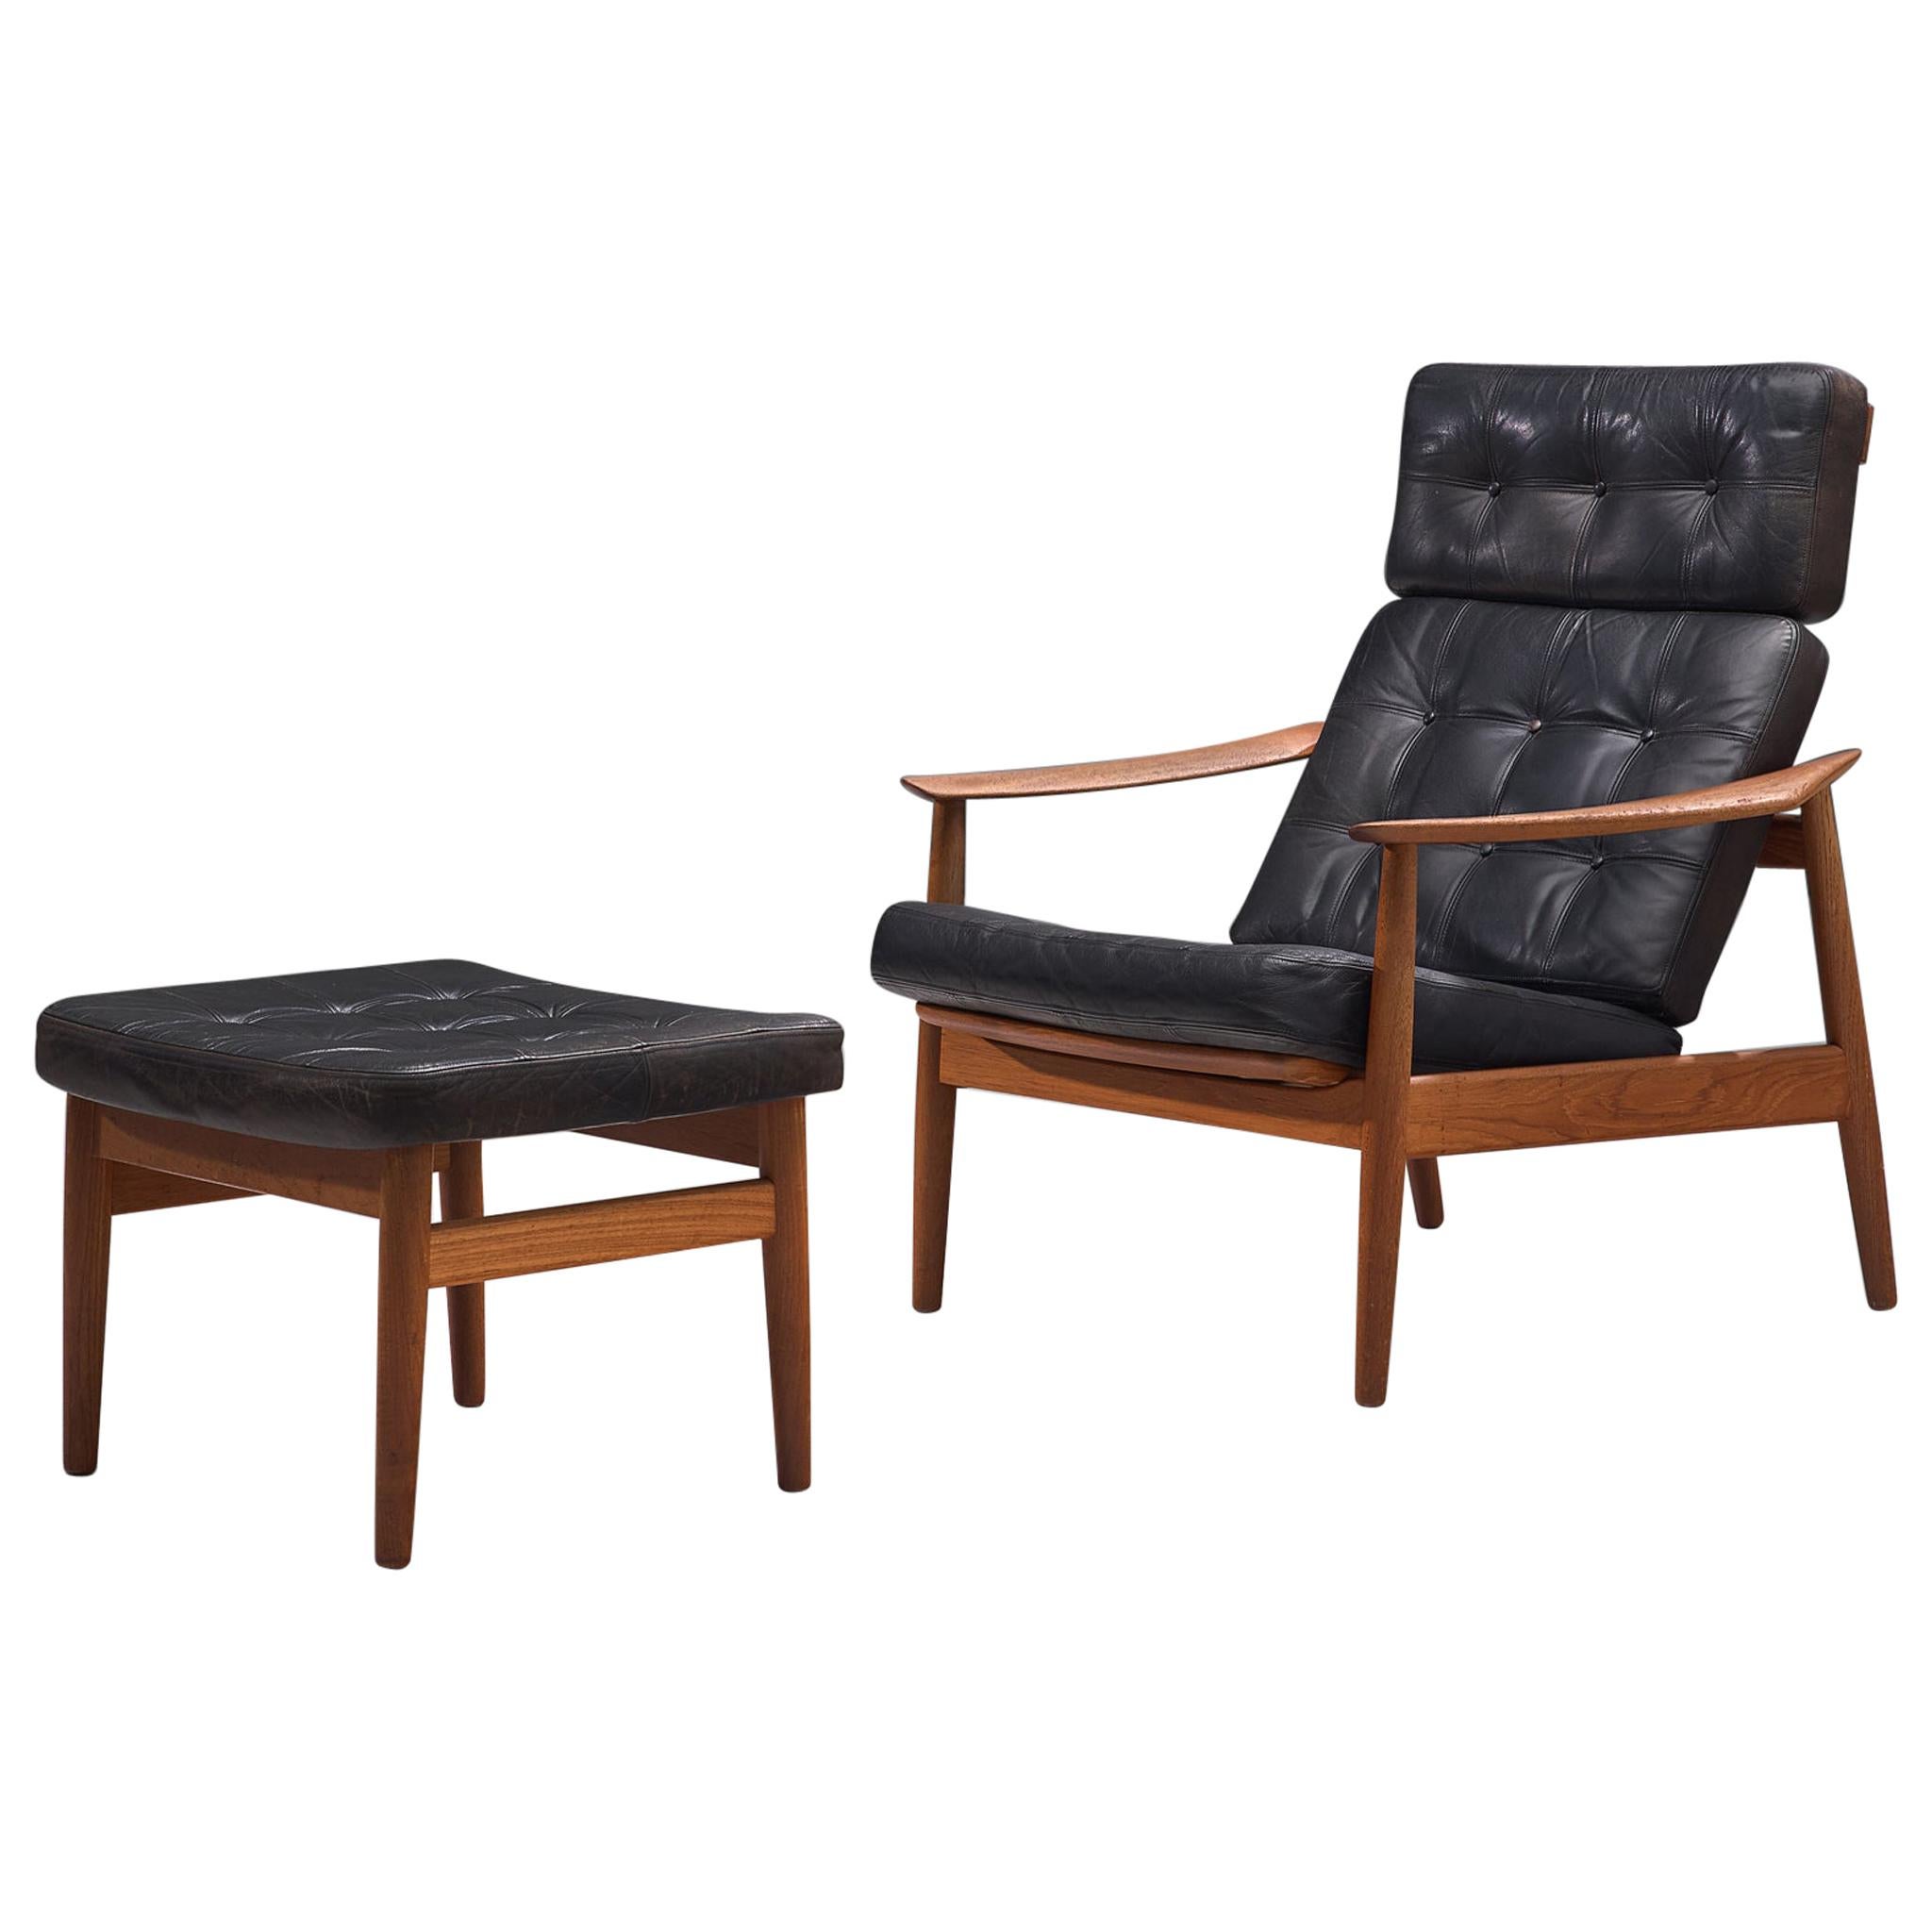 Arne Vodder 'FD164' Teak Lounge Chair and Ottoman